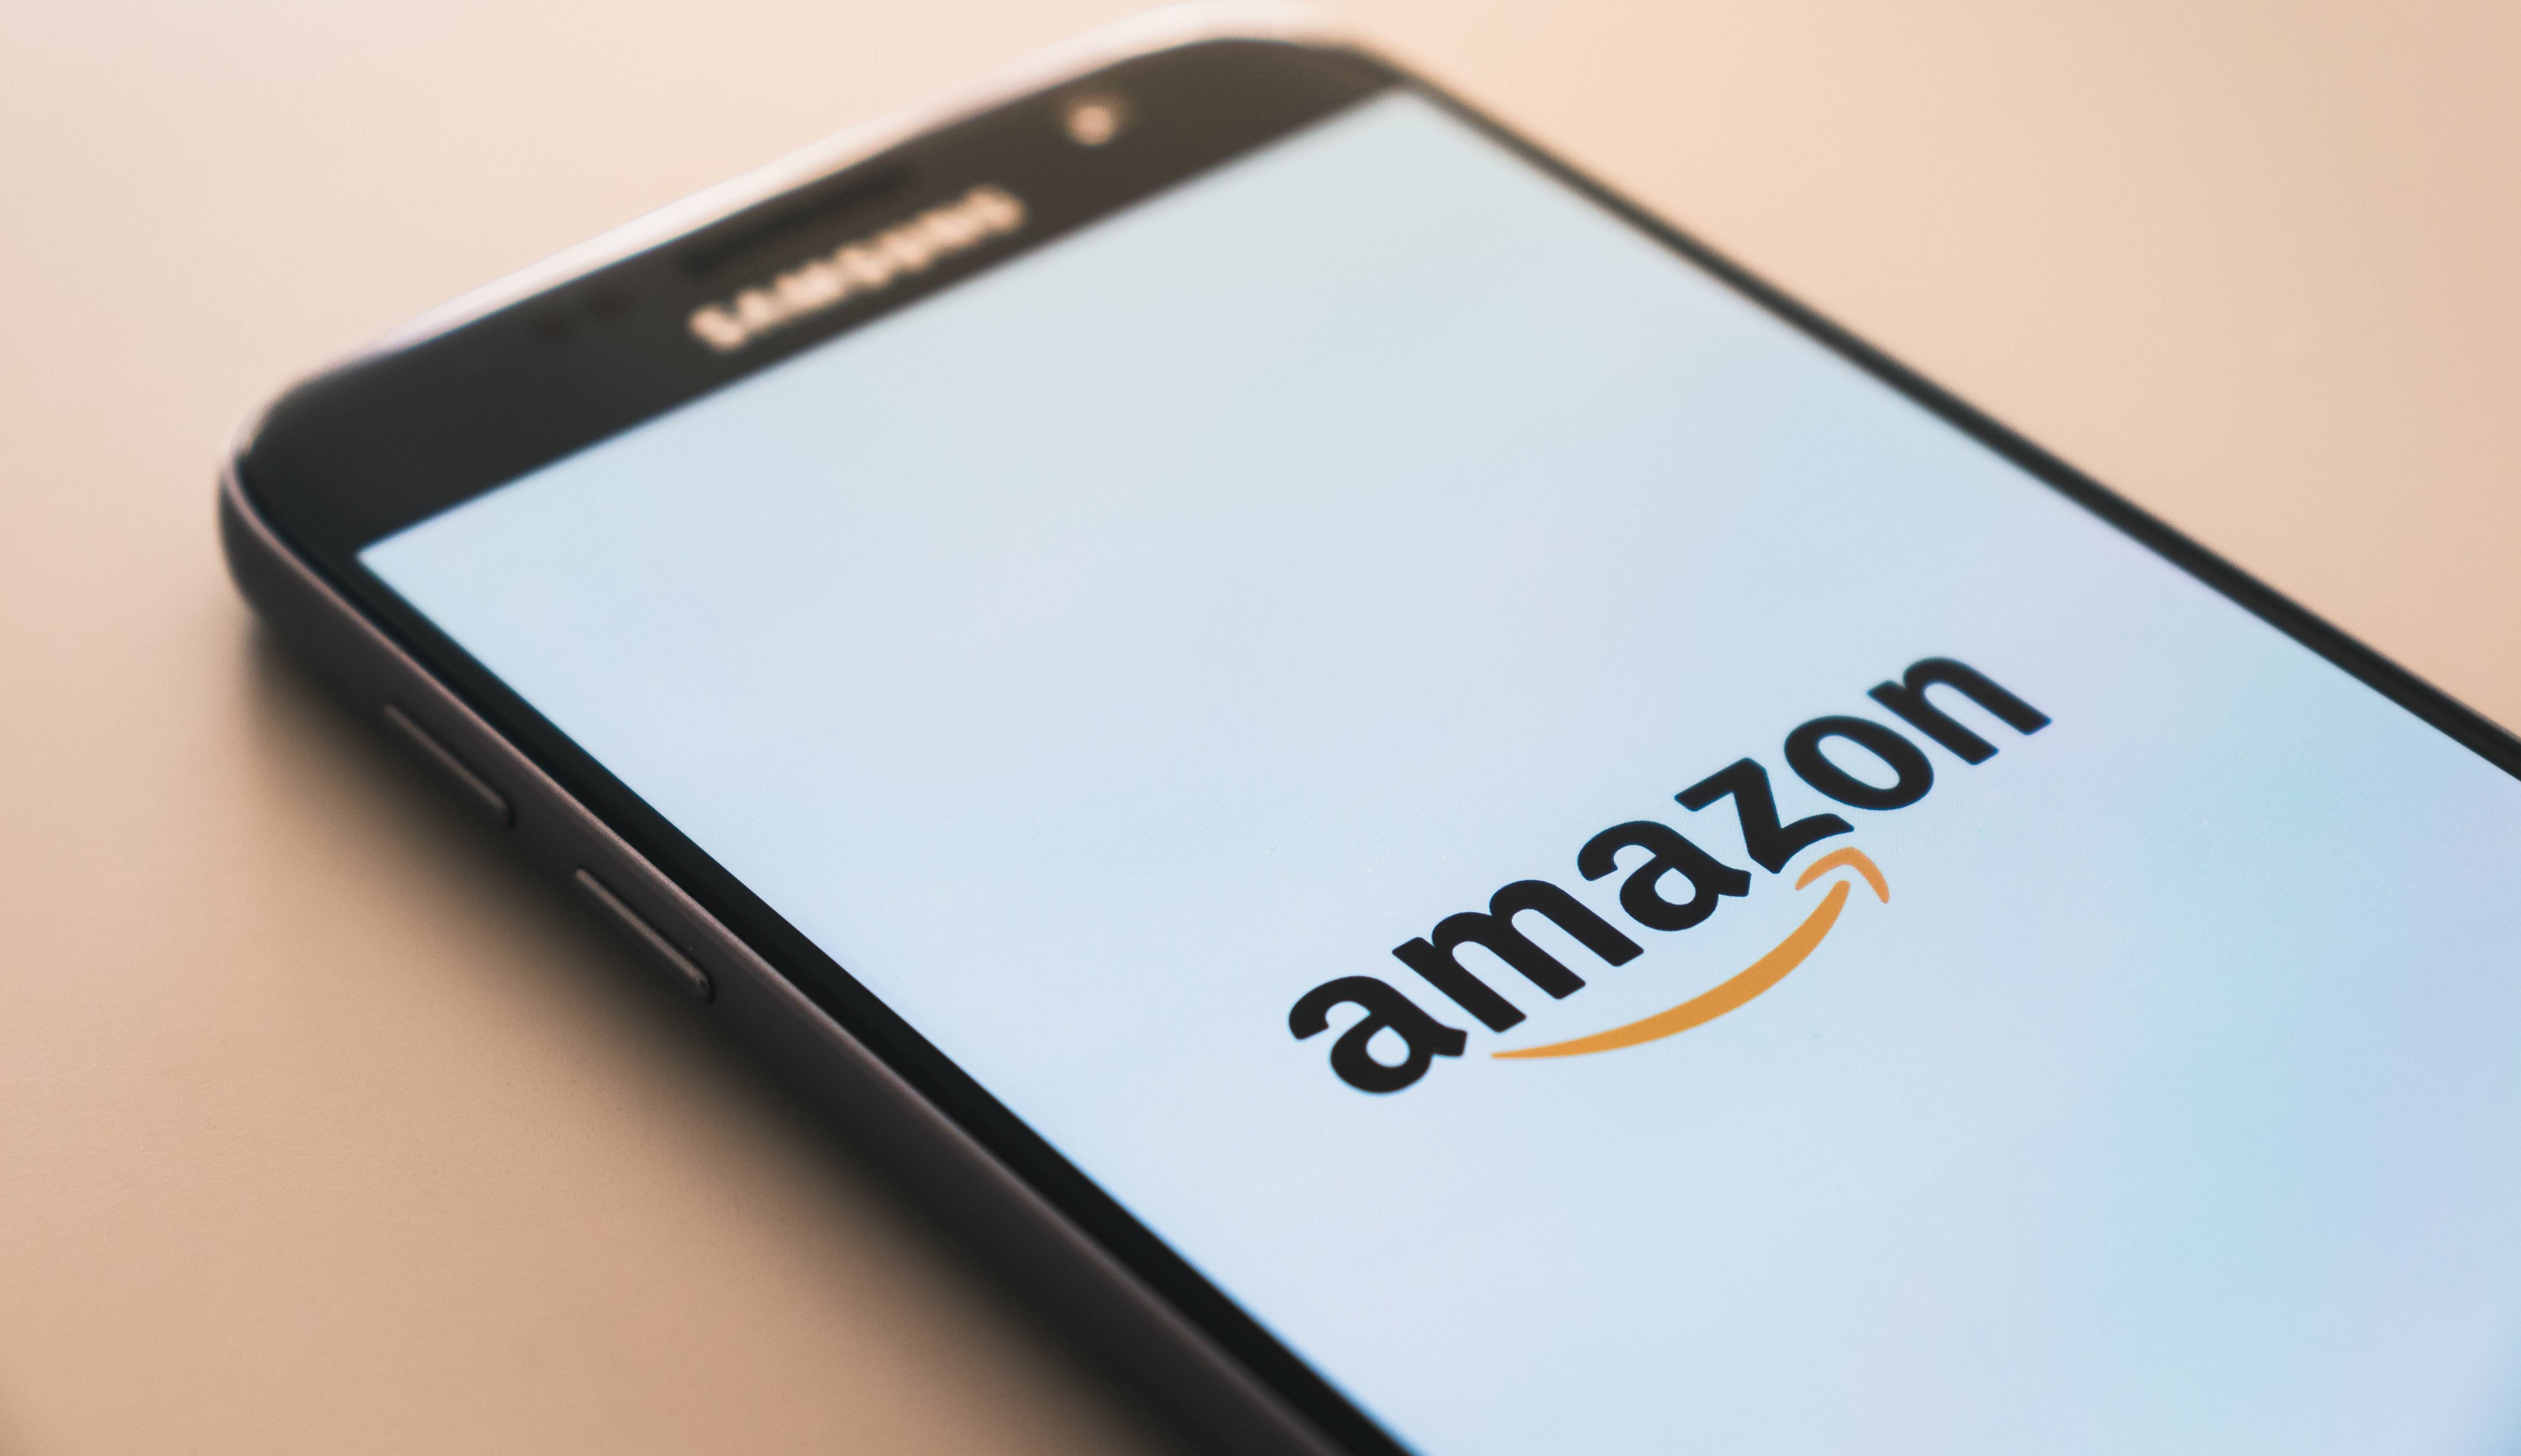 Amazon pretende abrir lojas físicas nos Estados Unidos, segundo jornal